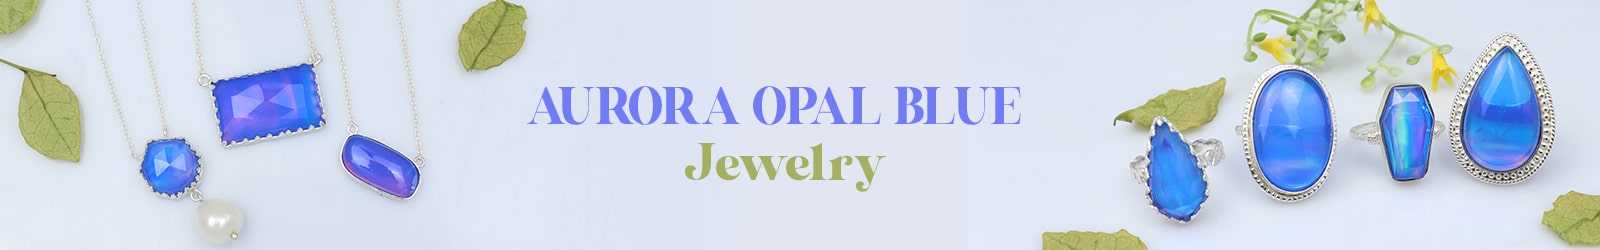 Aurora Opal Blue Jewelry